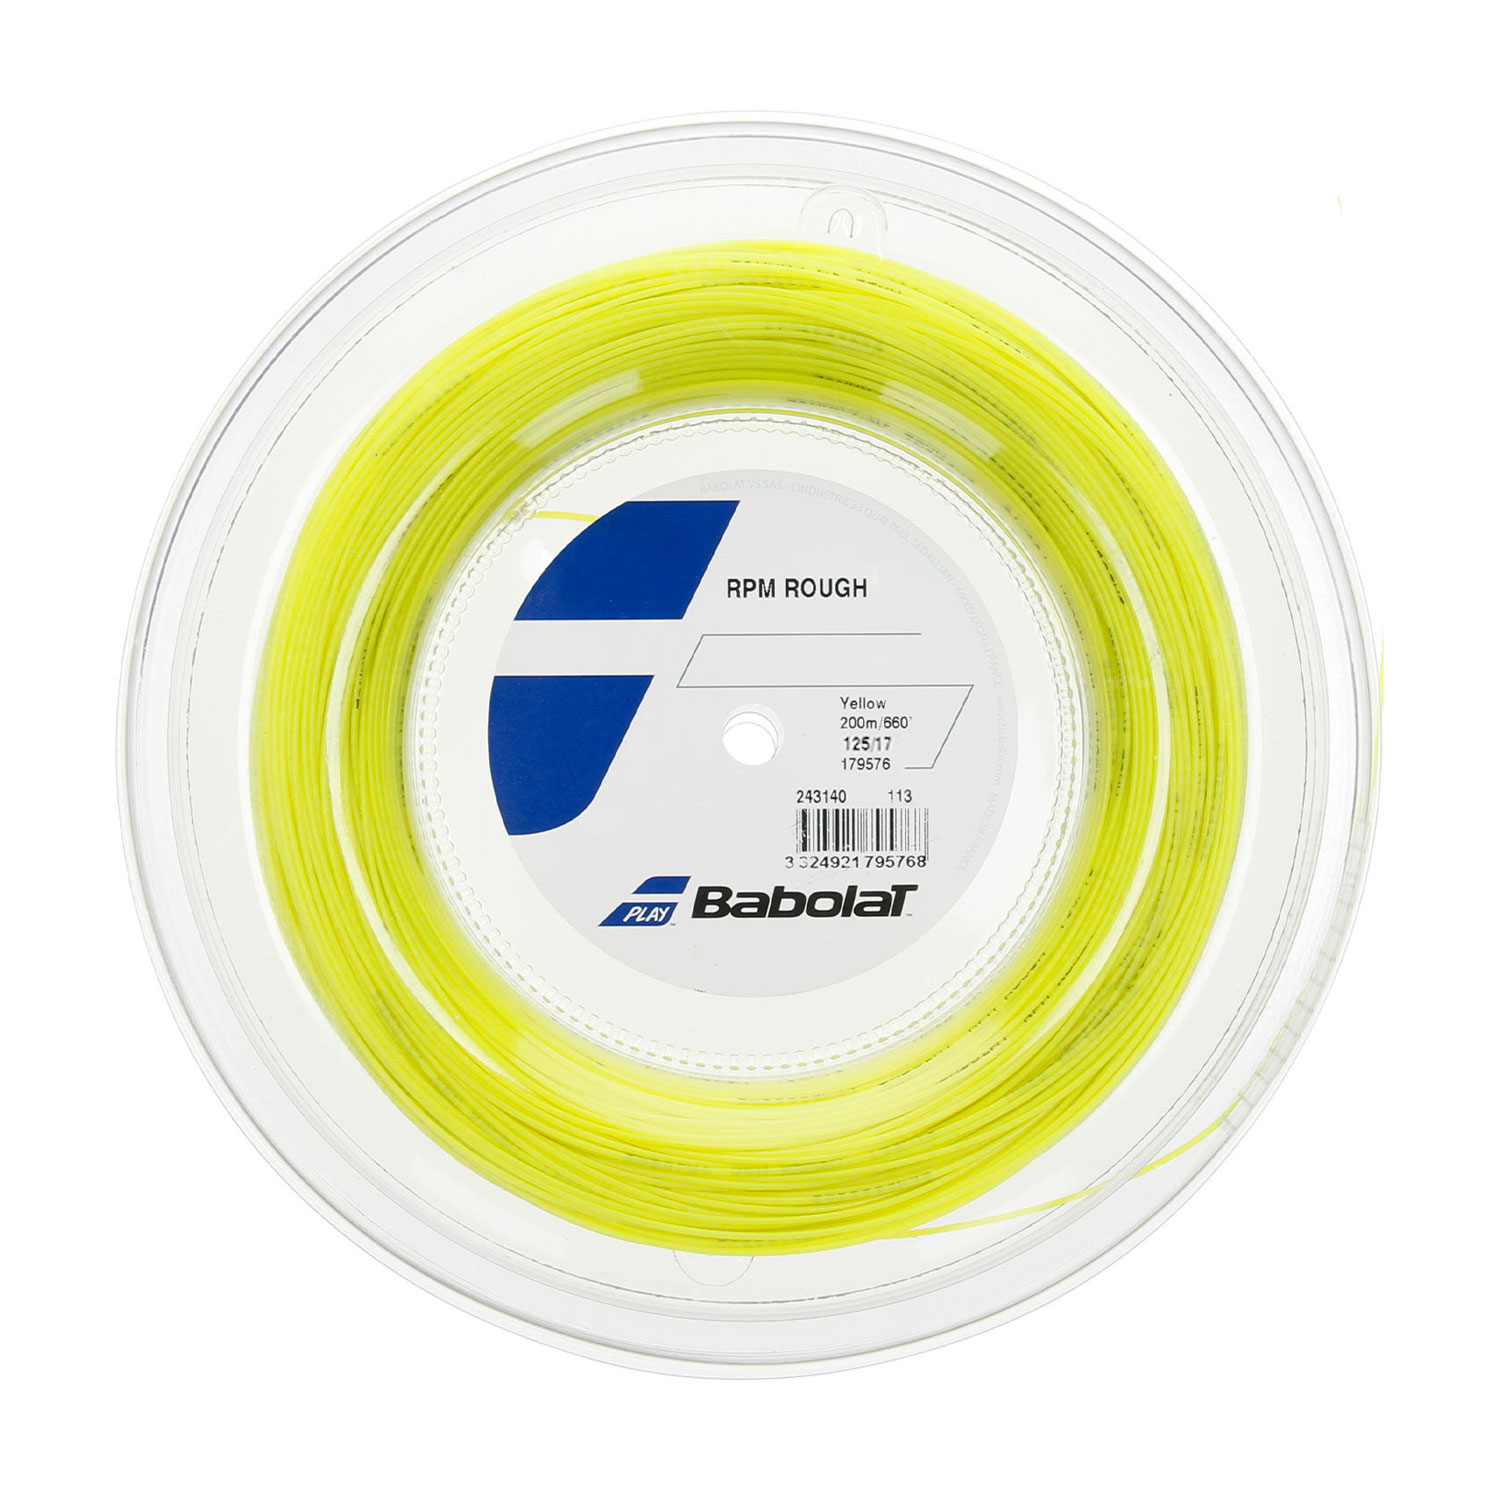 Babolat RPM Rough 1.25 200 m String Reel - Yellow